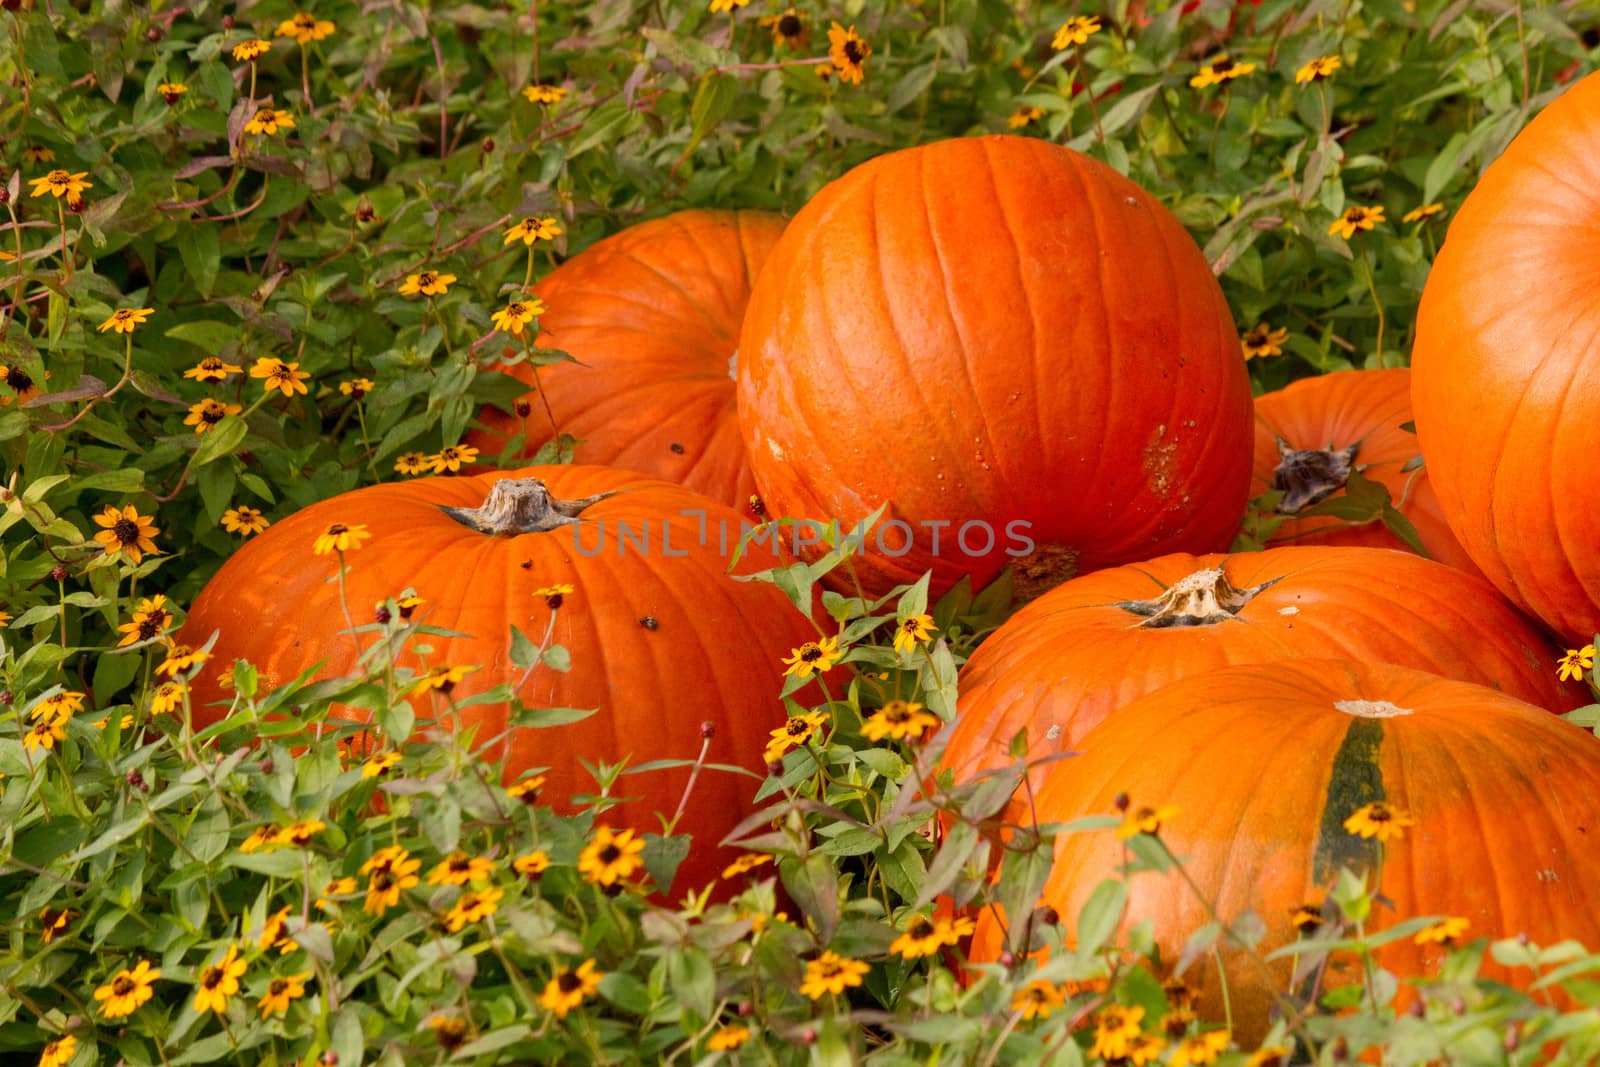 Pumpkins in the flowers